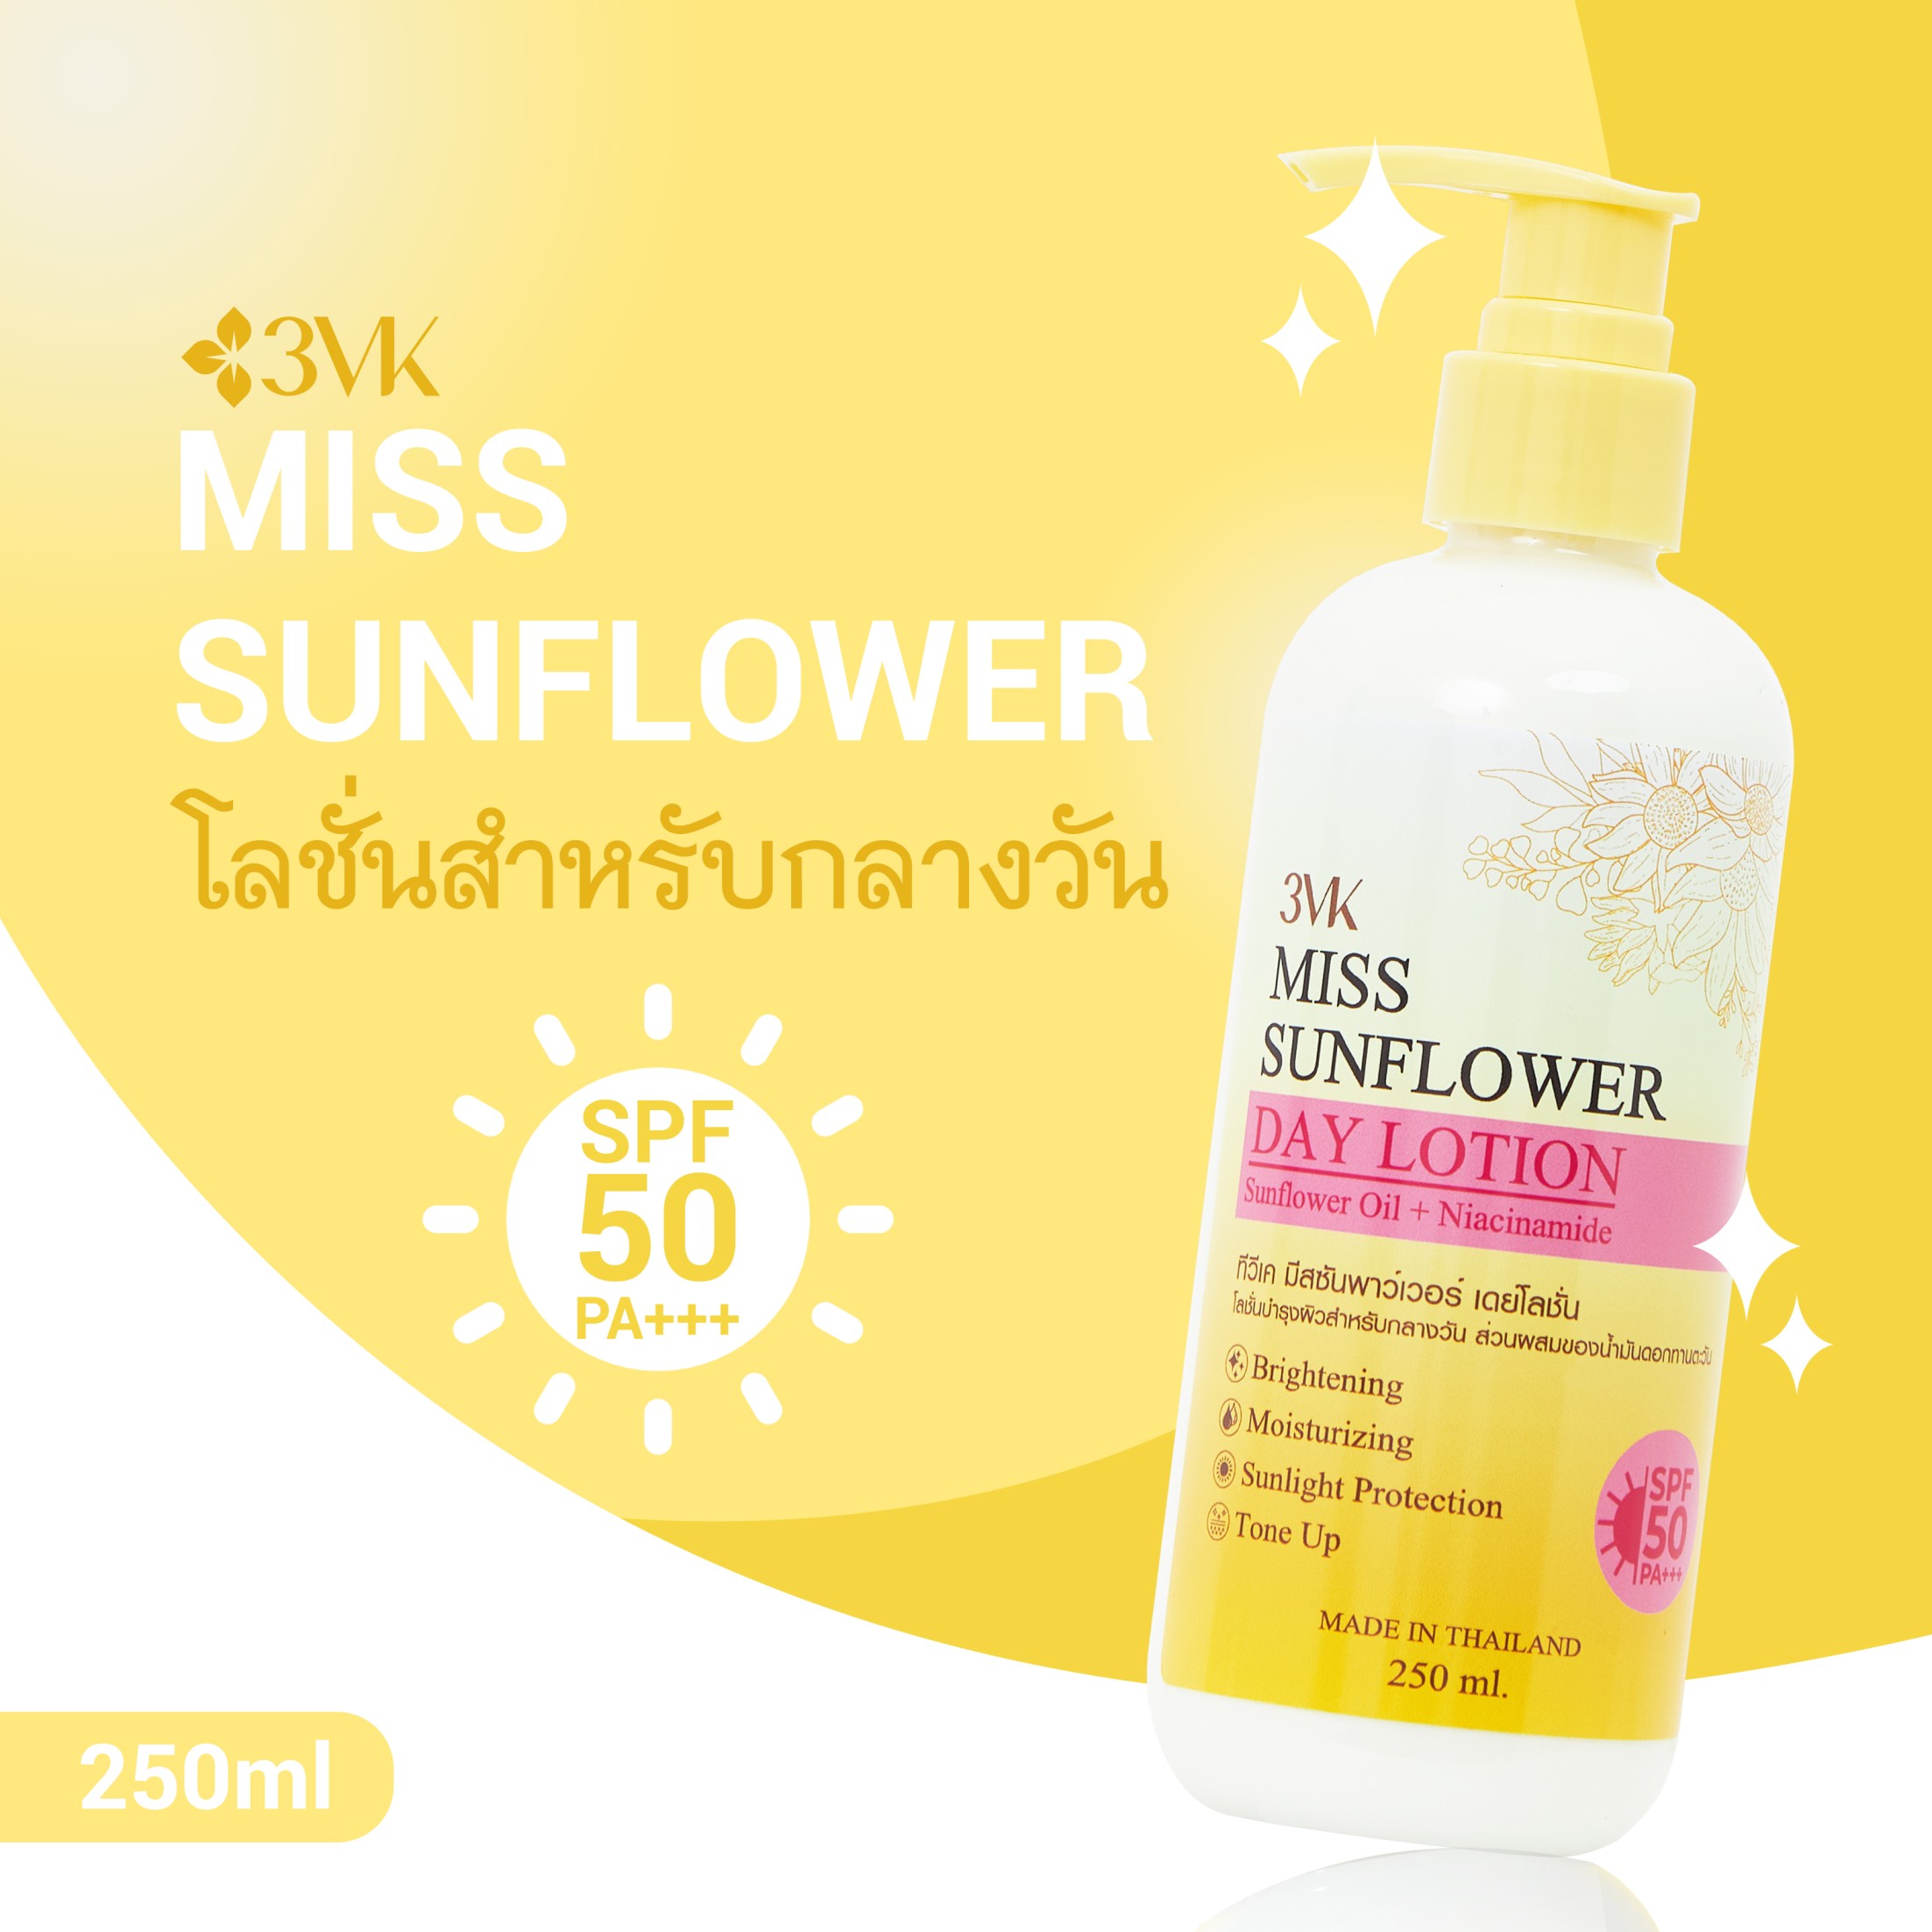 3VK Miss Sunflower Day Lotion 250ml